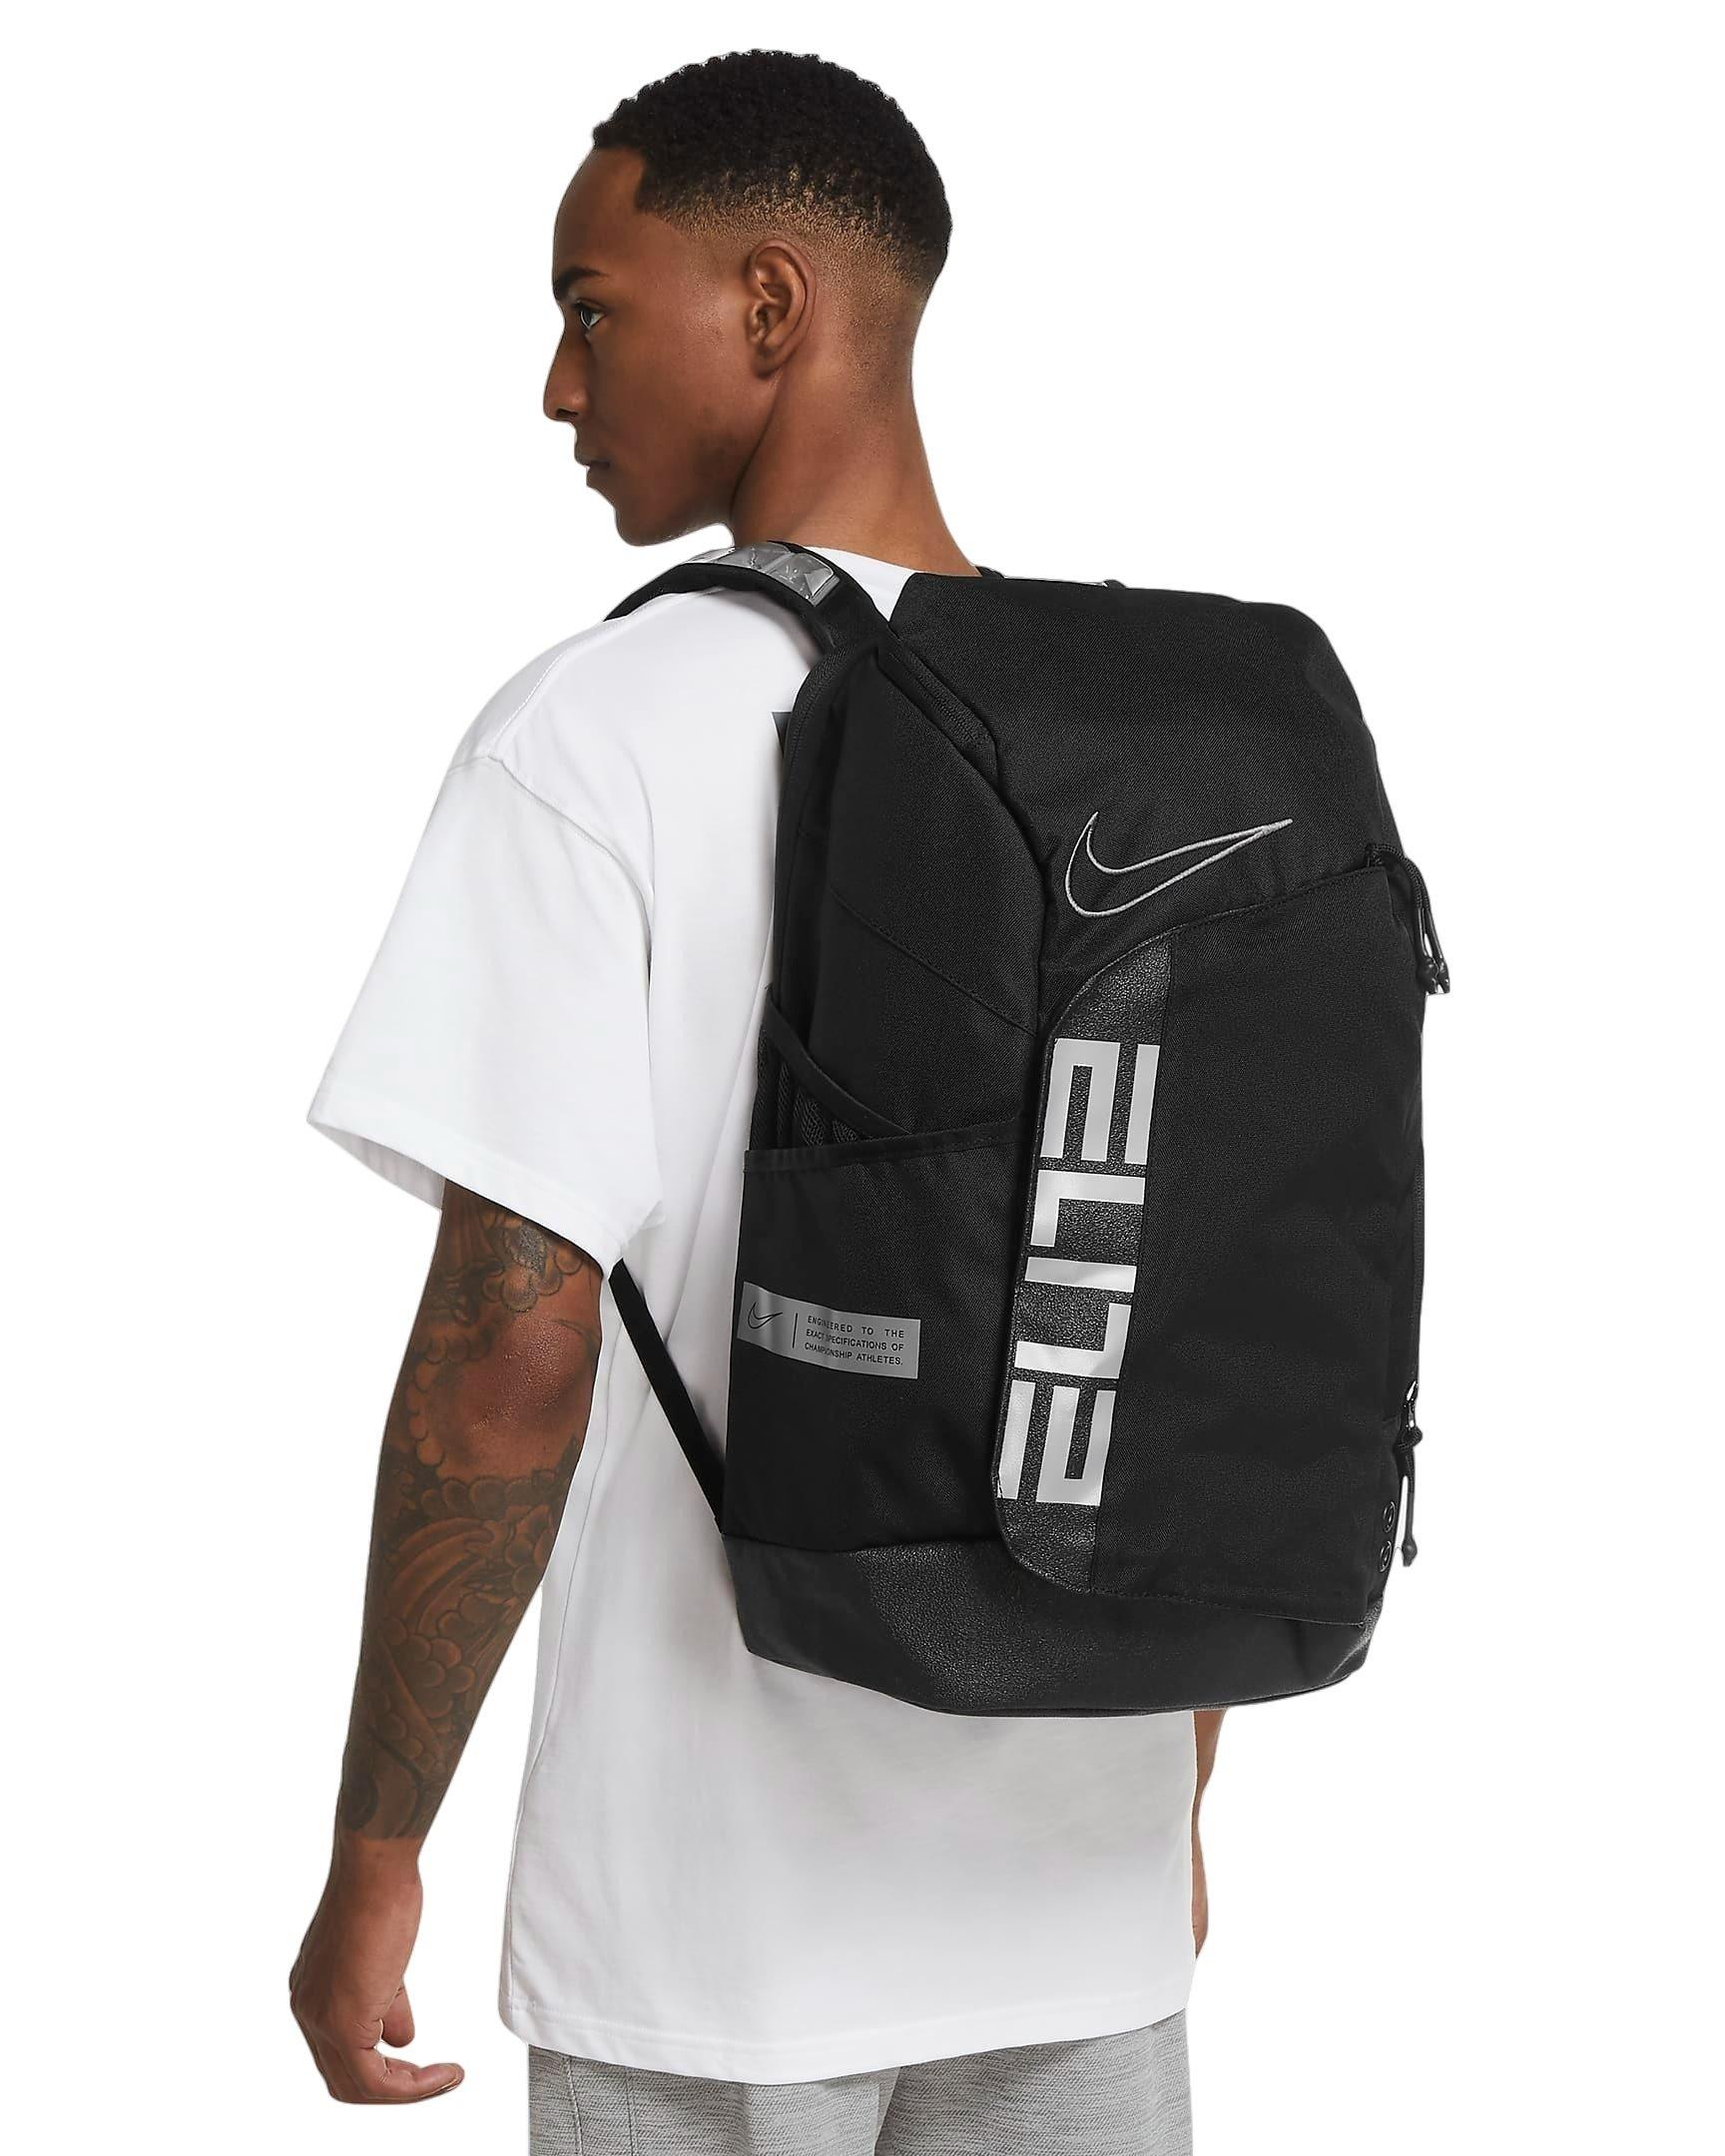 visión Completo gesto Nike Elite Pro 32L Basketball Backpack​